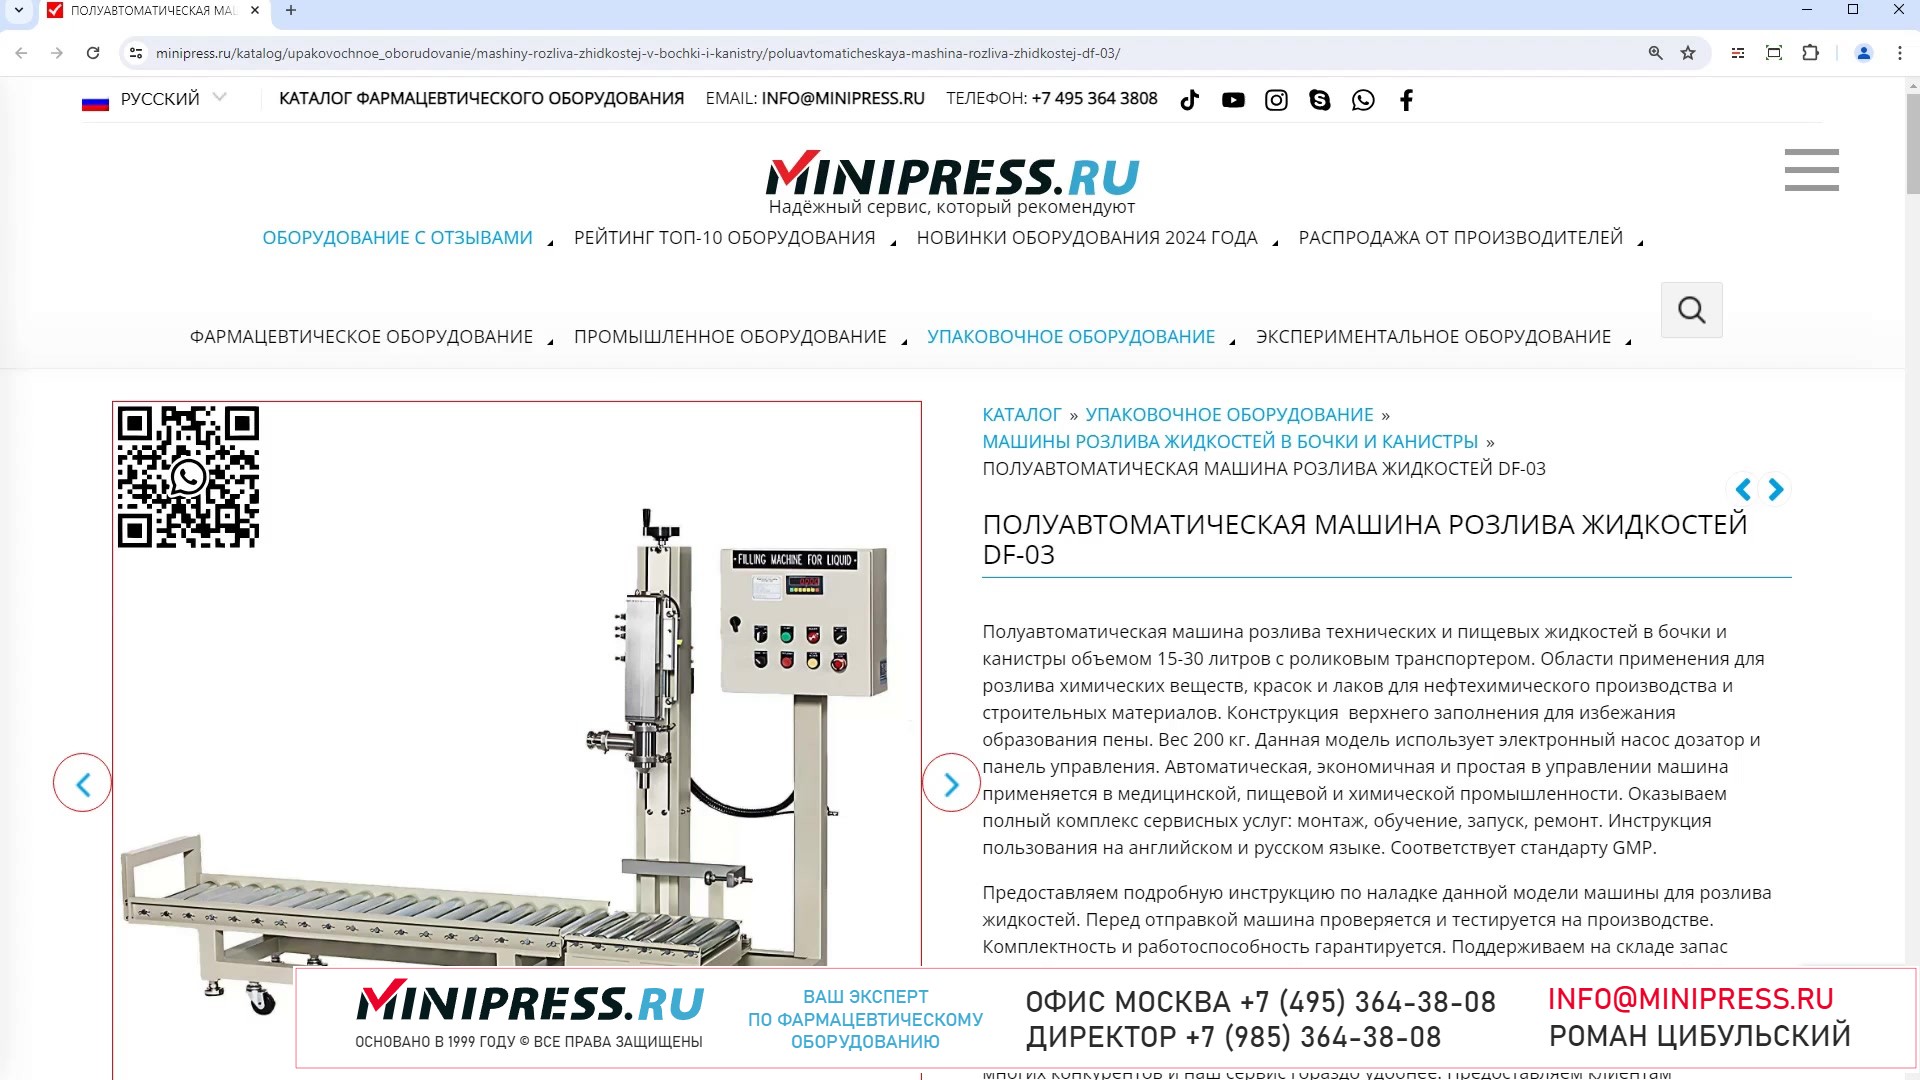 Minipress.ru Полуавтоматическая машина розлива жидкостей DF-03